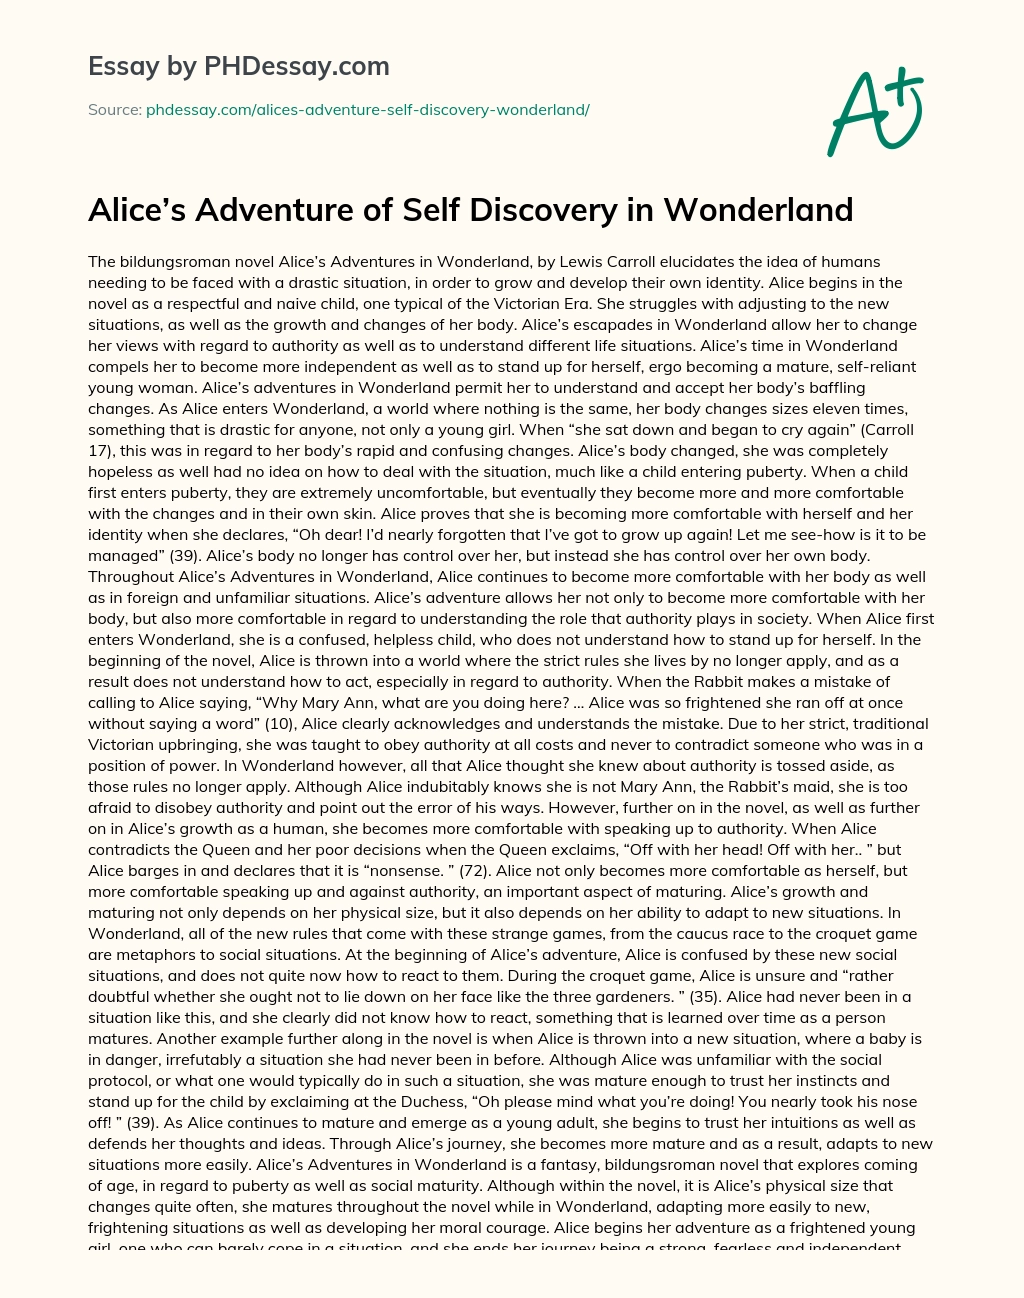 Alice’s Adventure of Self Discovery in Wonderland essay